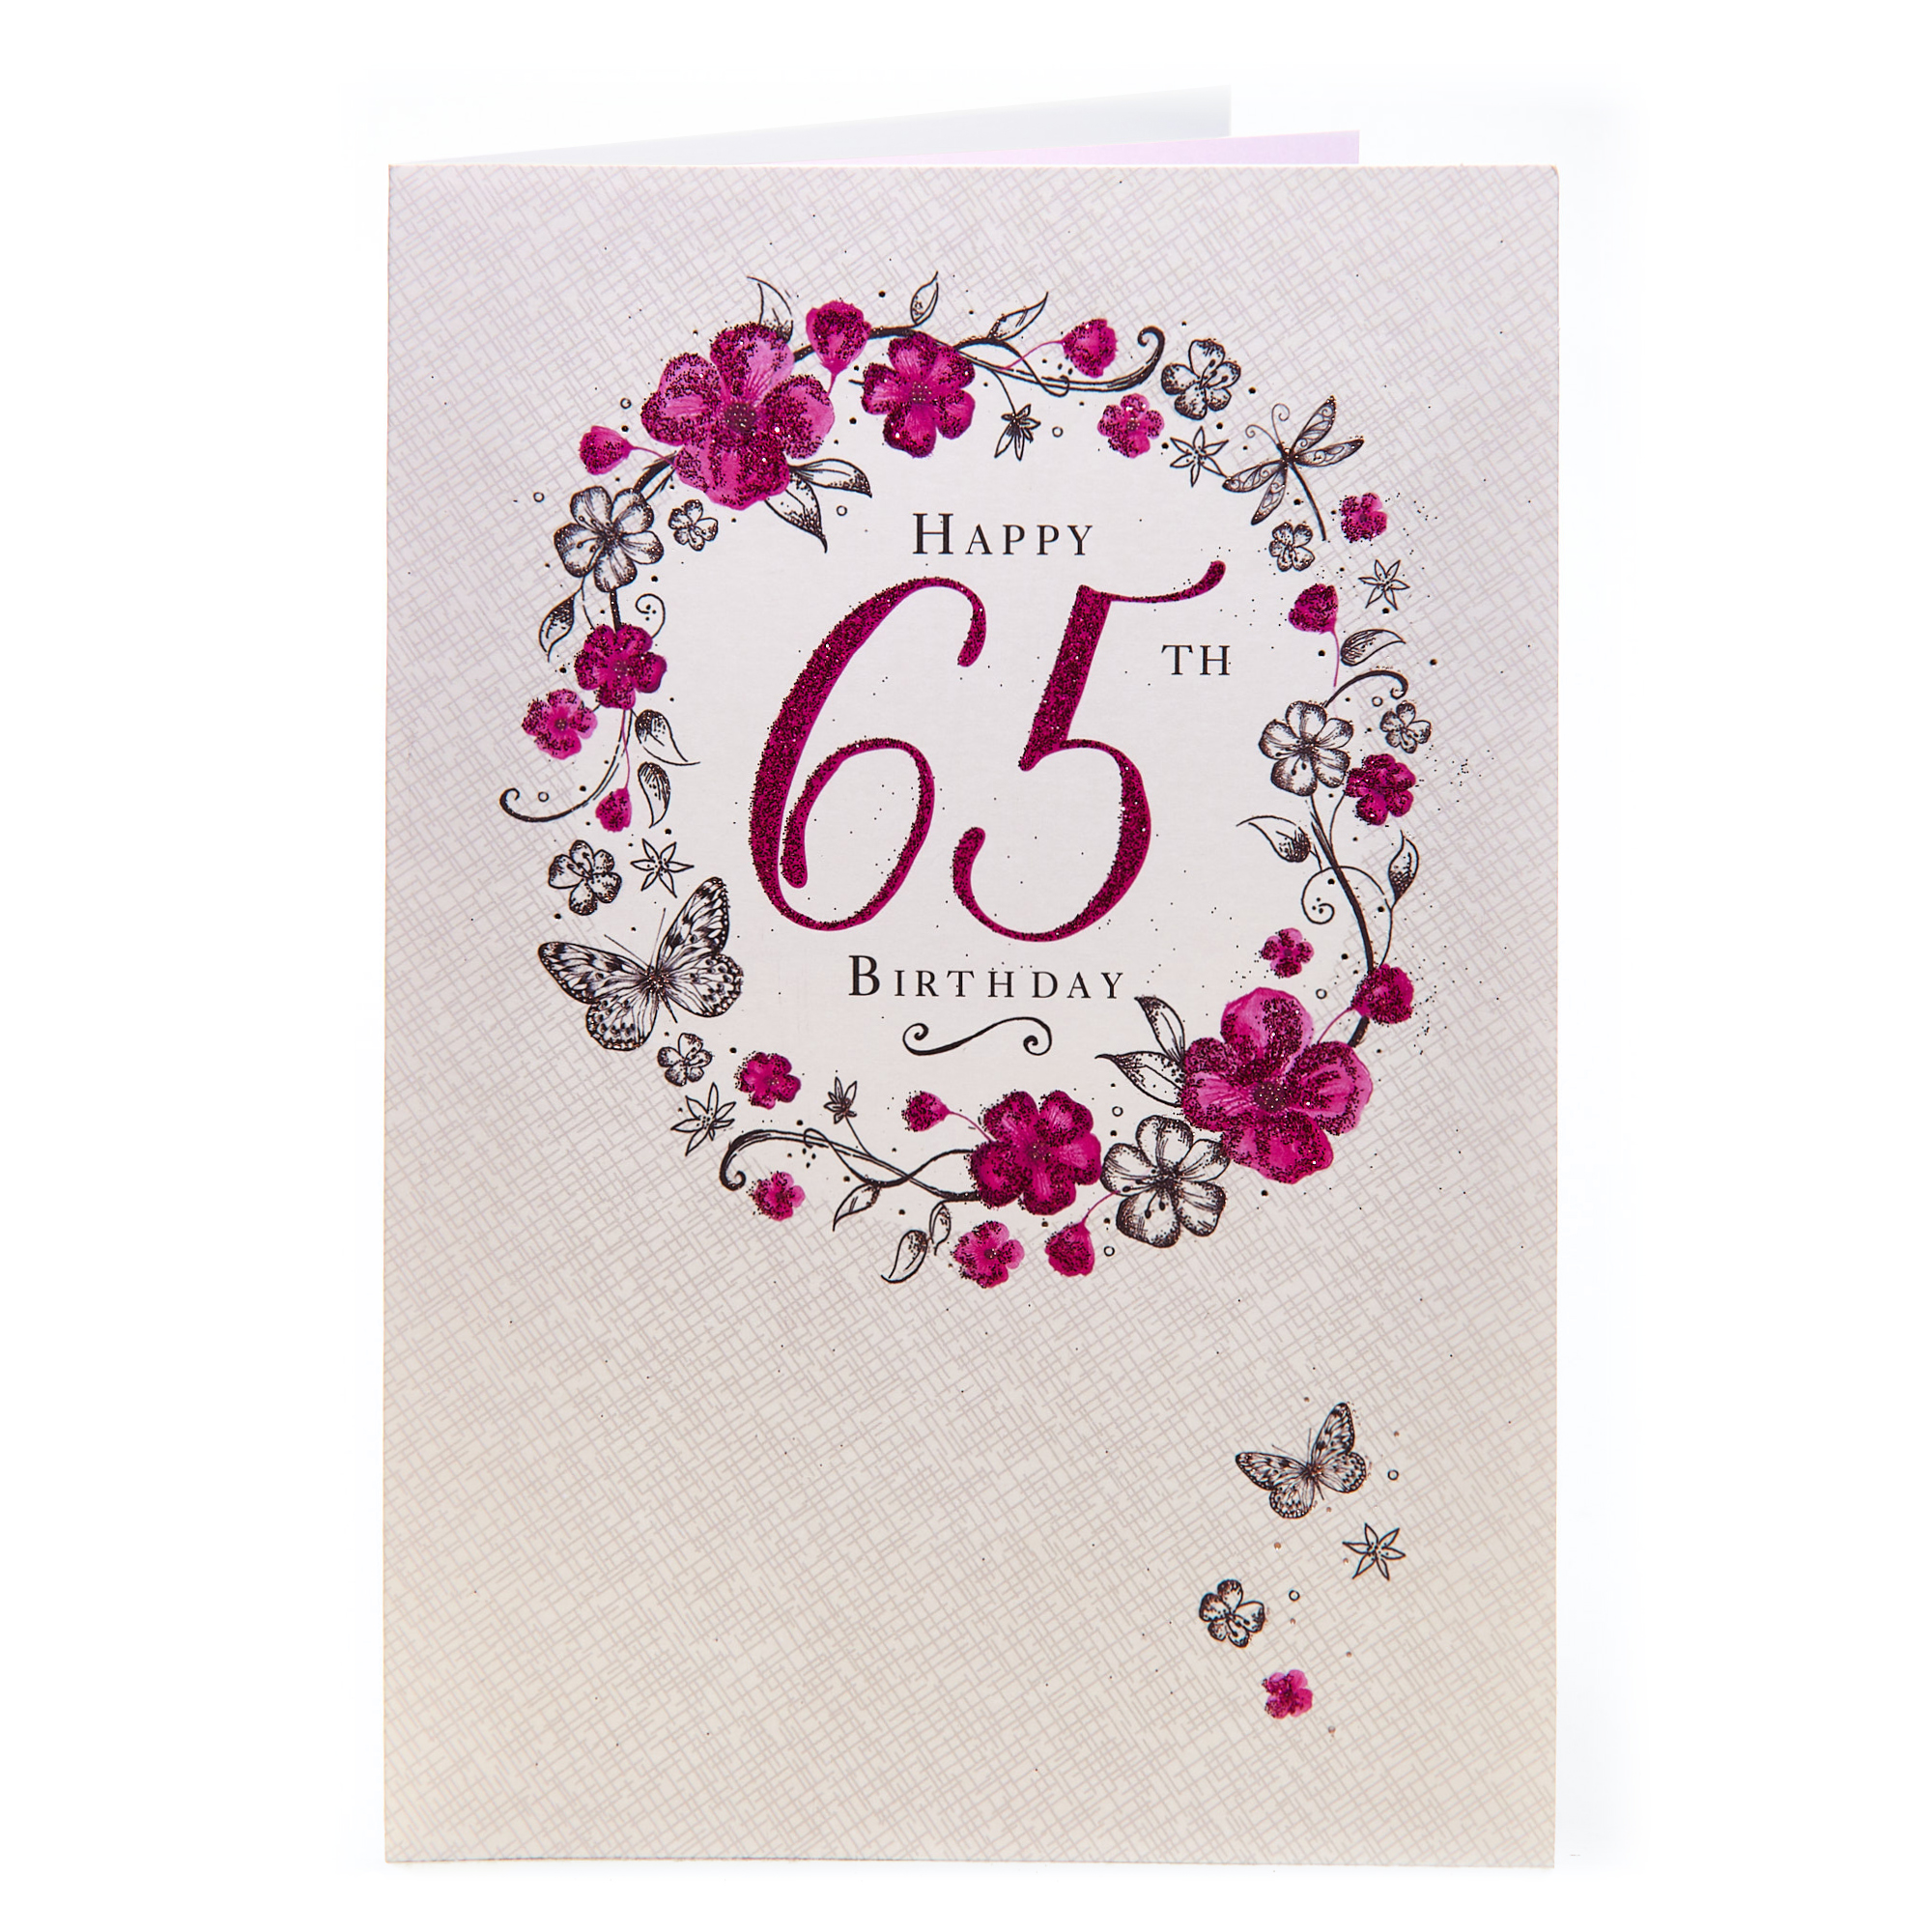 65th Birthday Card - Floral Border